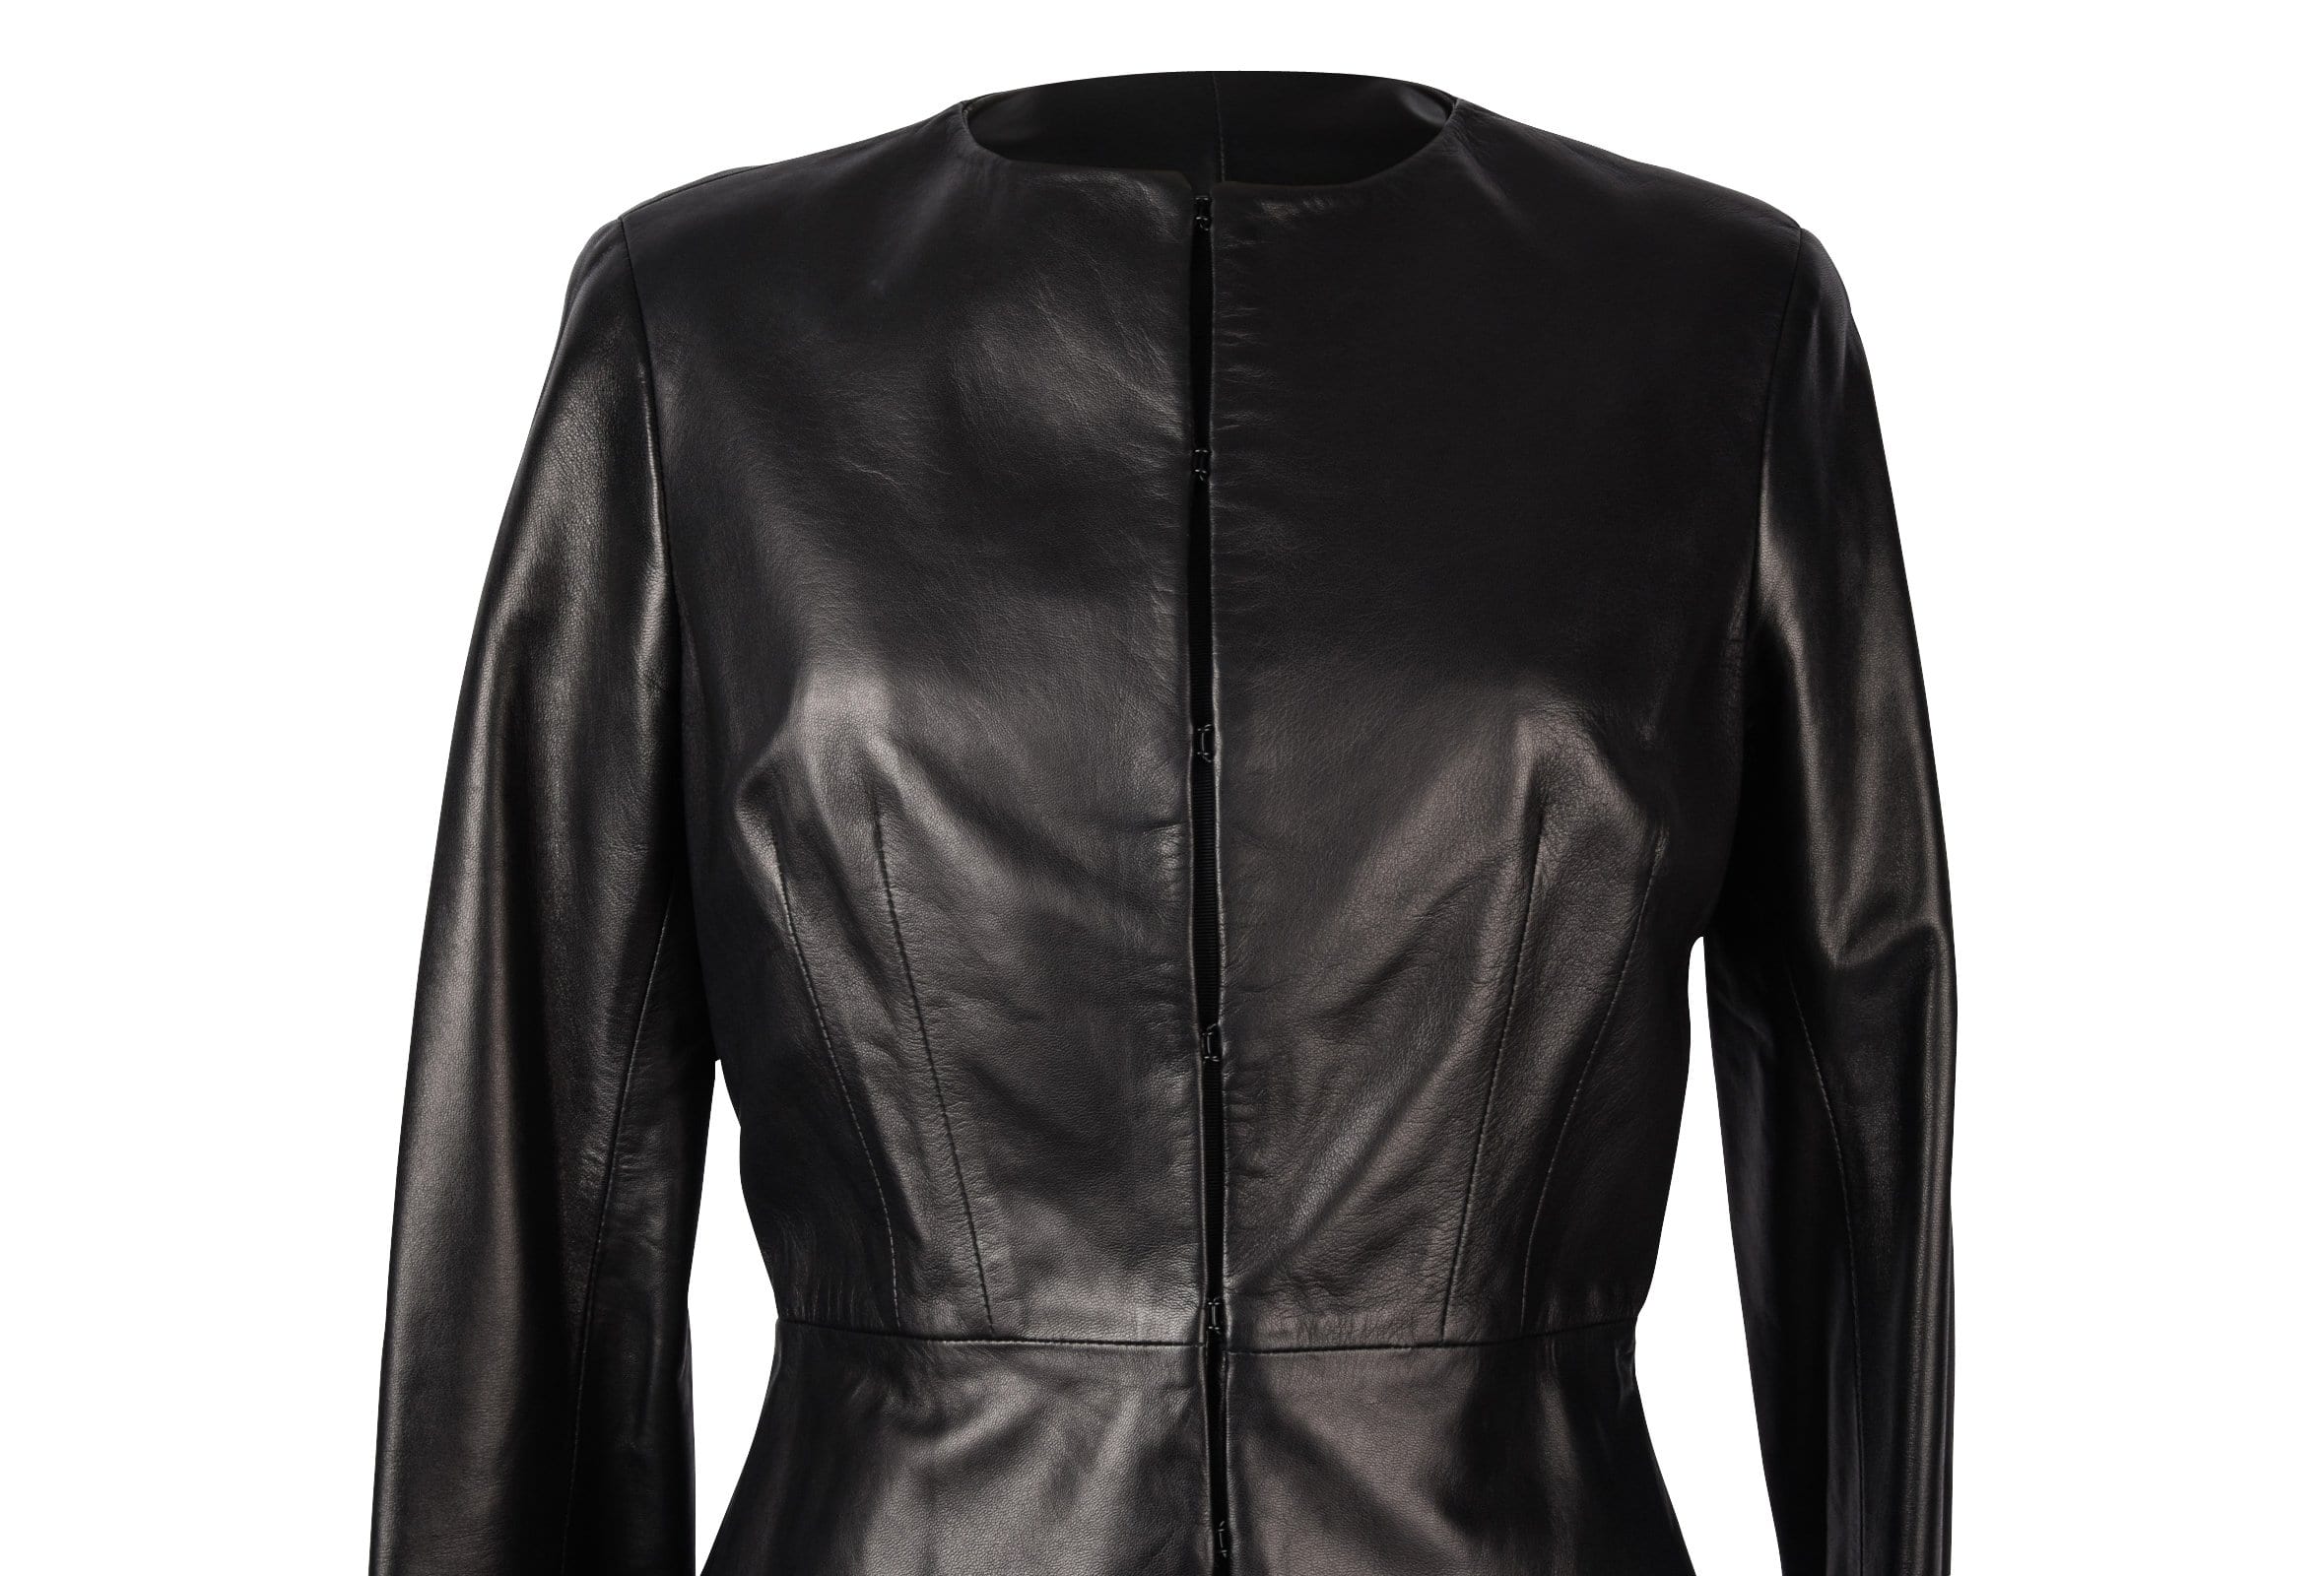 Carolina Herrera Jacket Peplum Black Lambskin Leather Feather Light 8 mint - mightychic